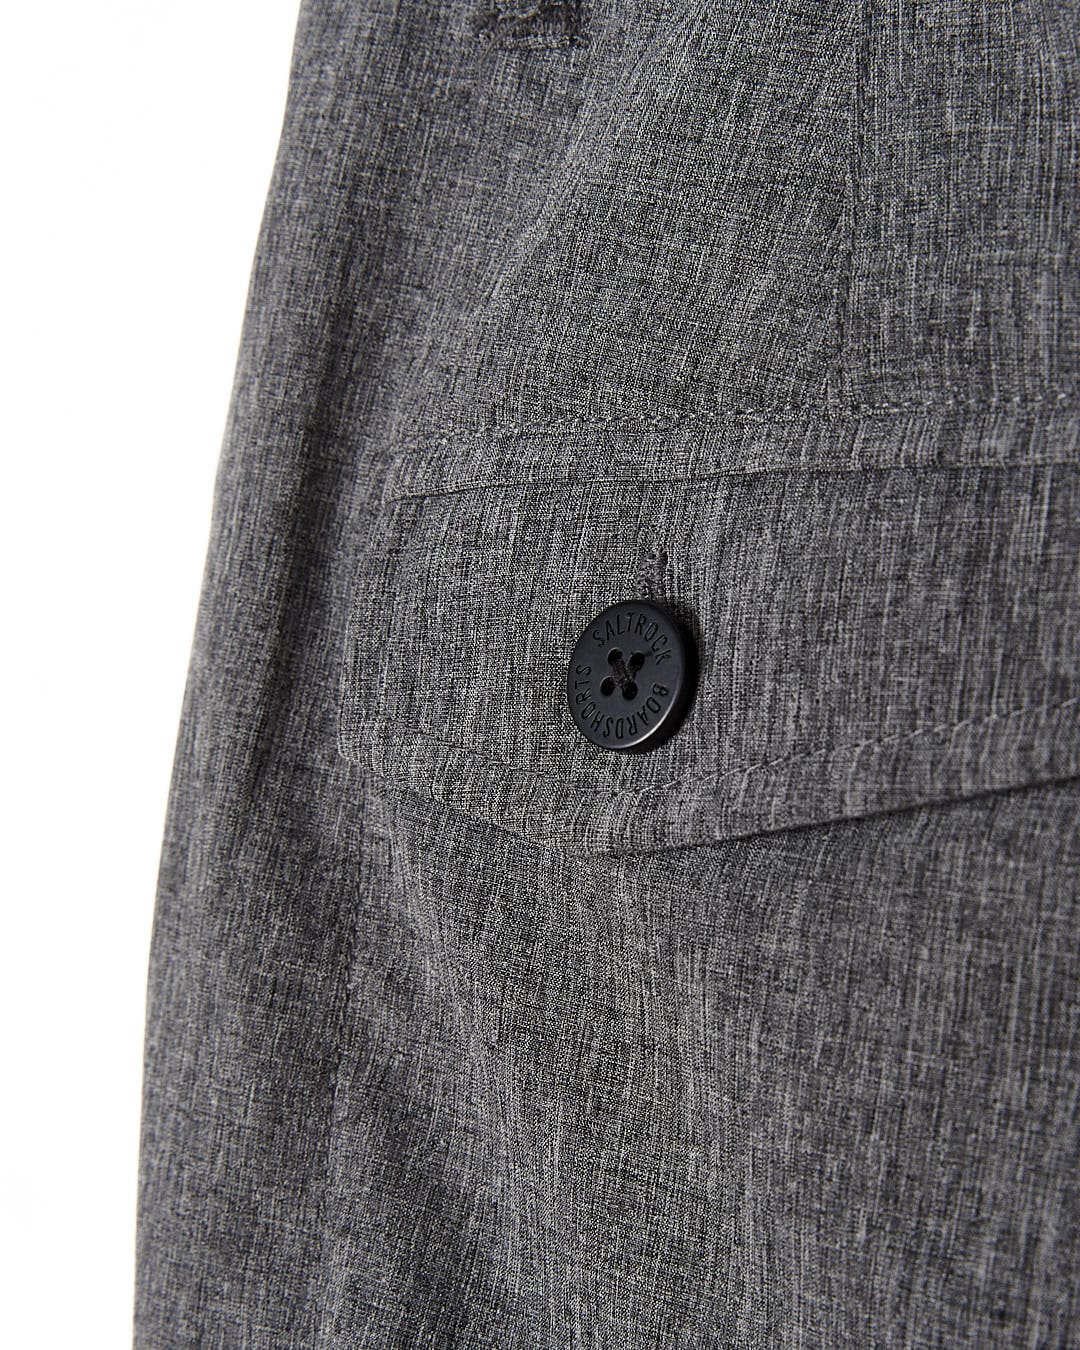 A close up of the button on a Saltrock Amphibian - Kids Boardshorts - Grey linen trouser.